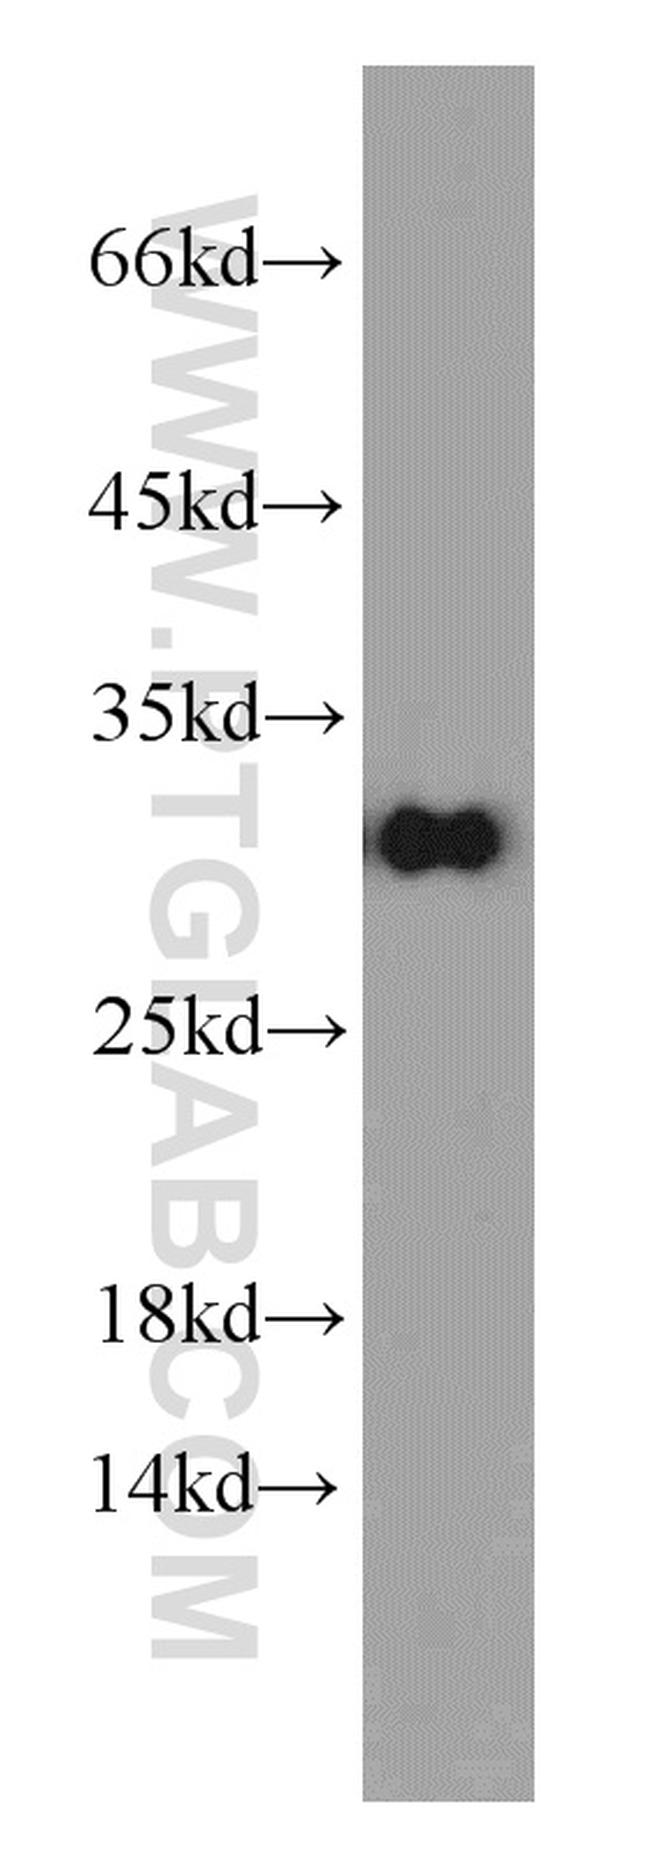 MRPS18B Antibody in Western Blot (WB)